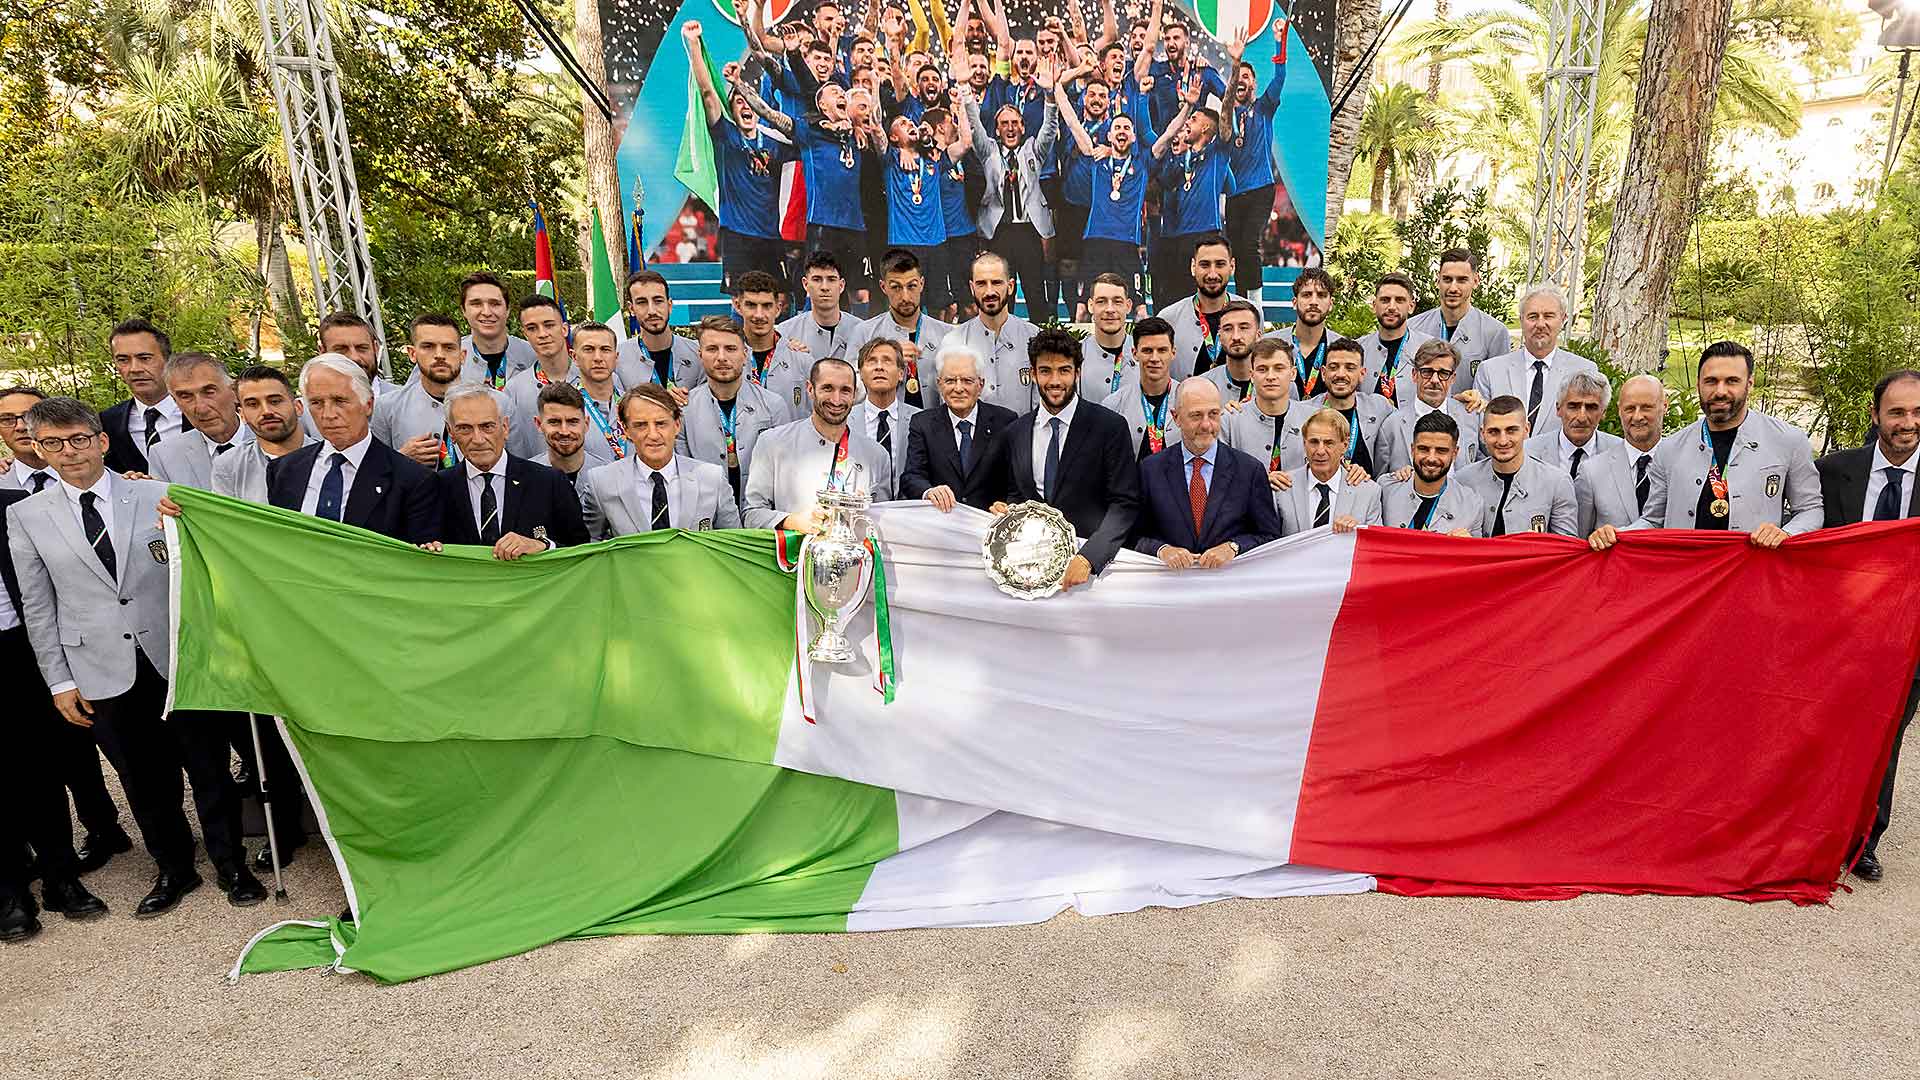 Berrettini and the Italian football team that won the European Championships in London on Sunday.